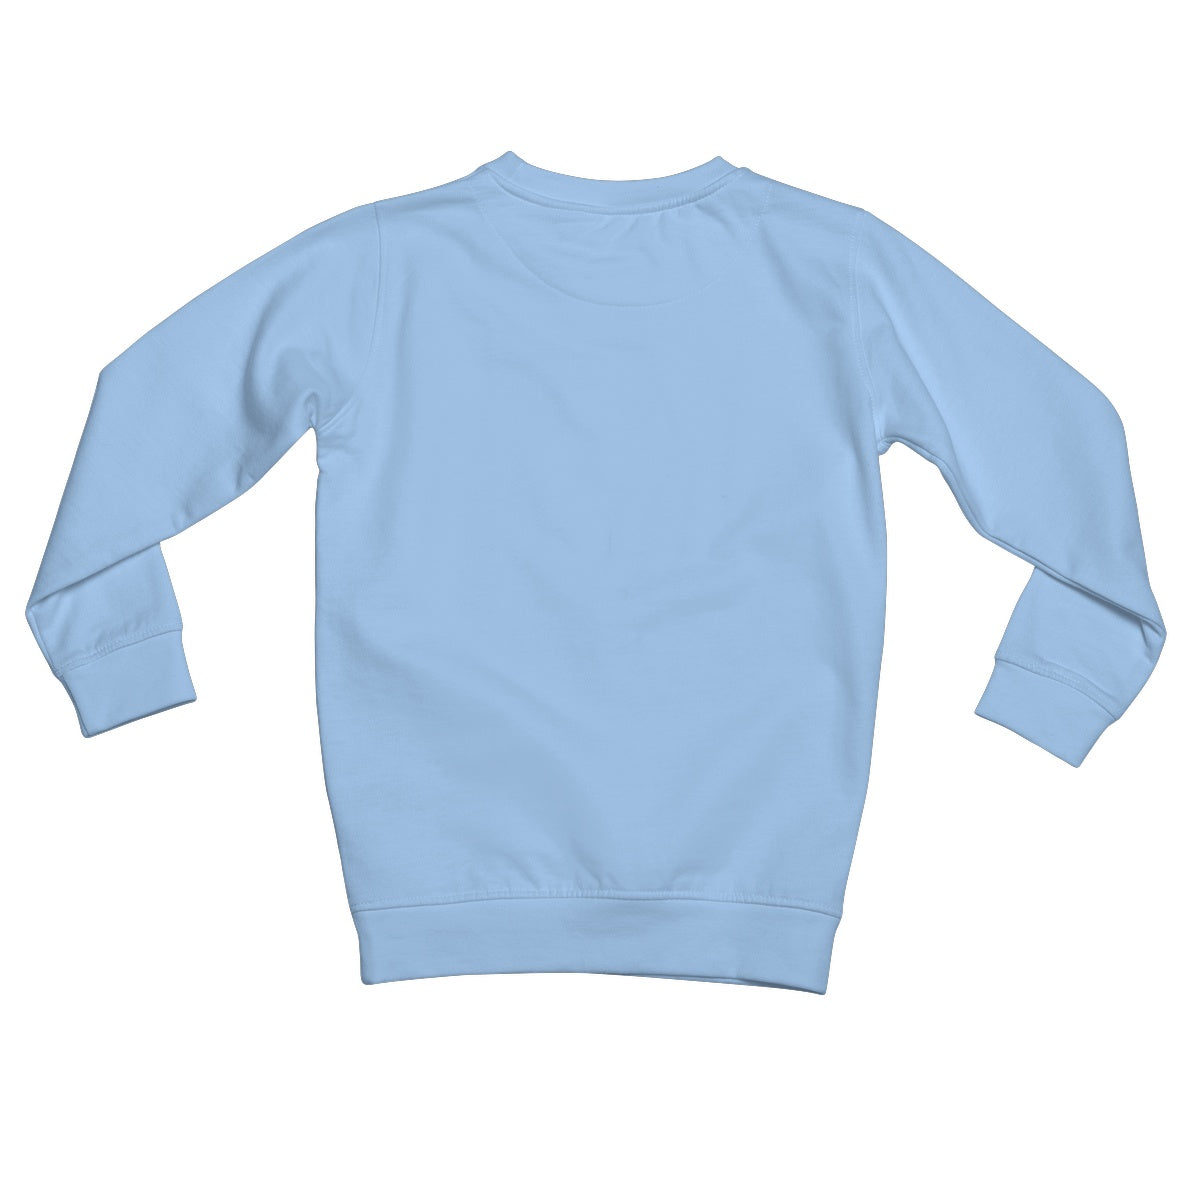 Blue Circles Kids Sweatshirt